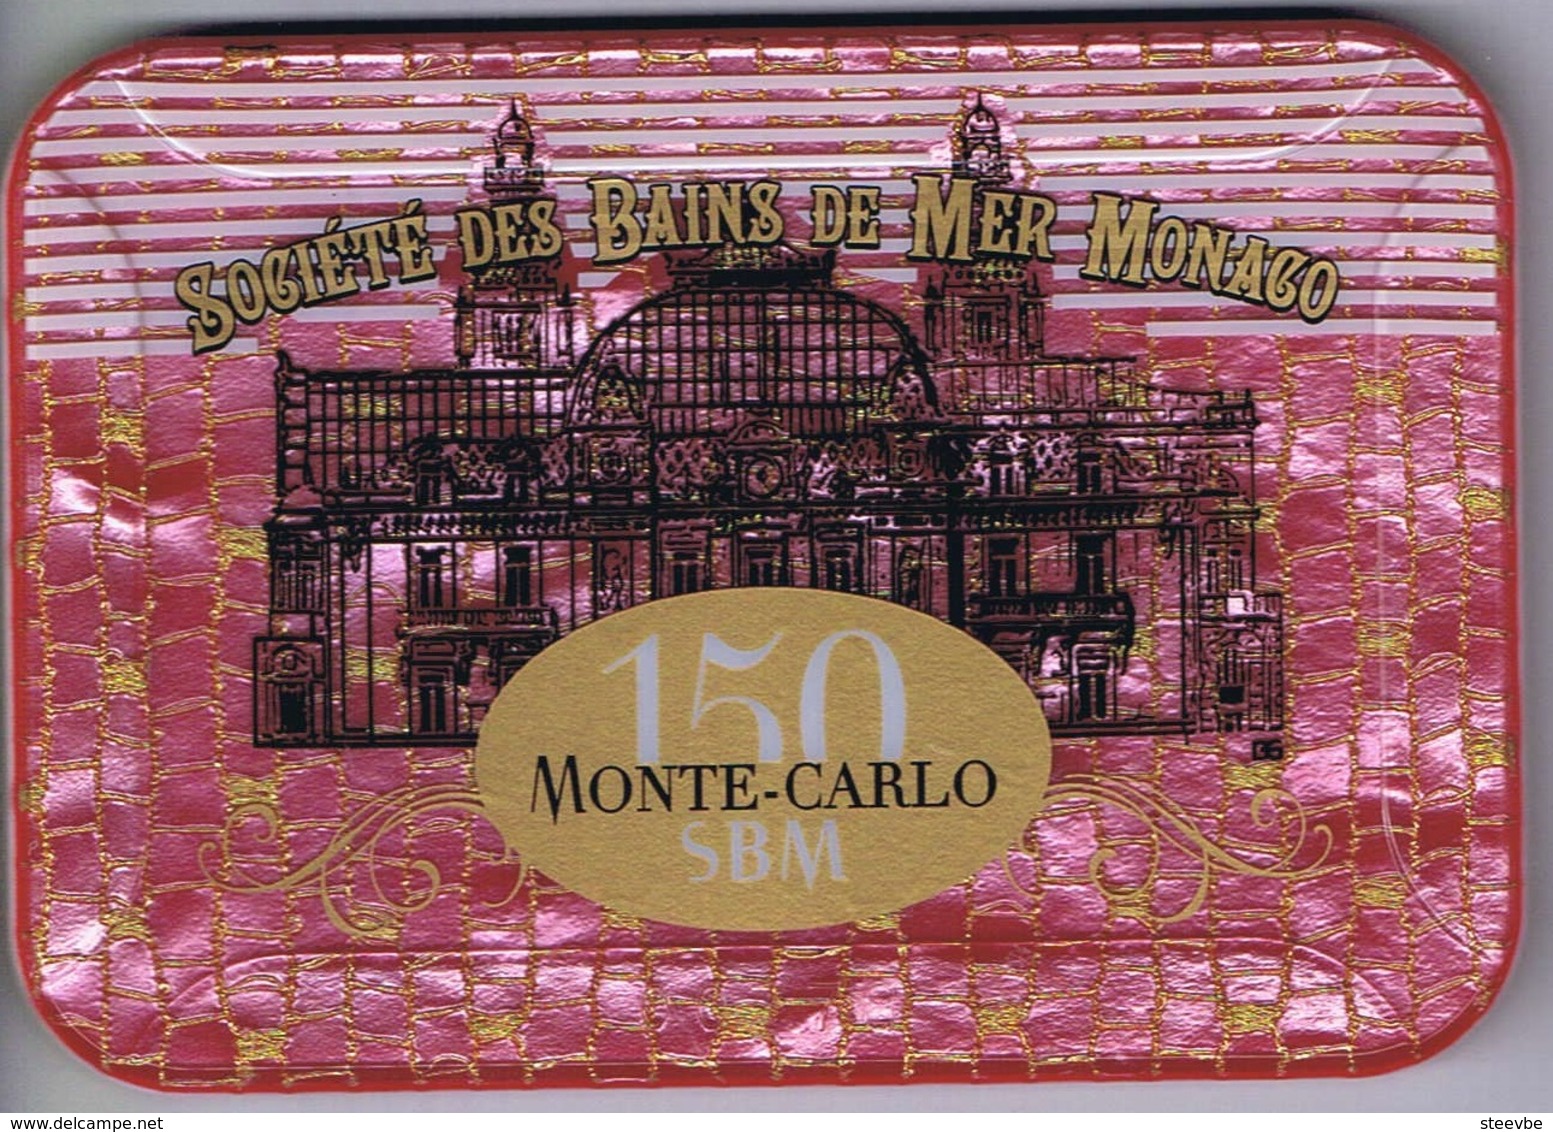 Casino Chip Plaque Société Des Bains De Mer Monte Carlo Monaco 150 SBM - Casino